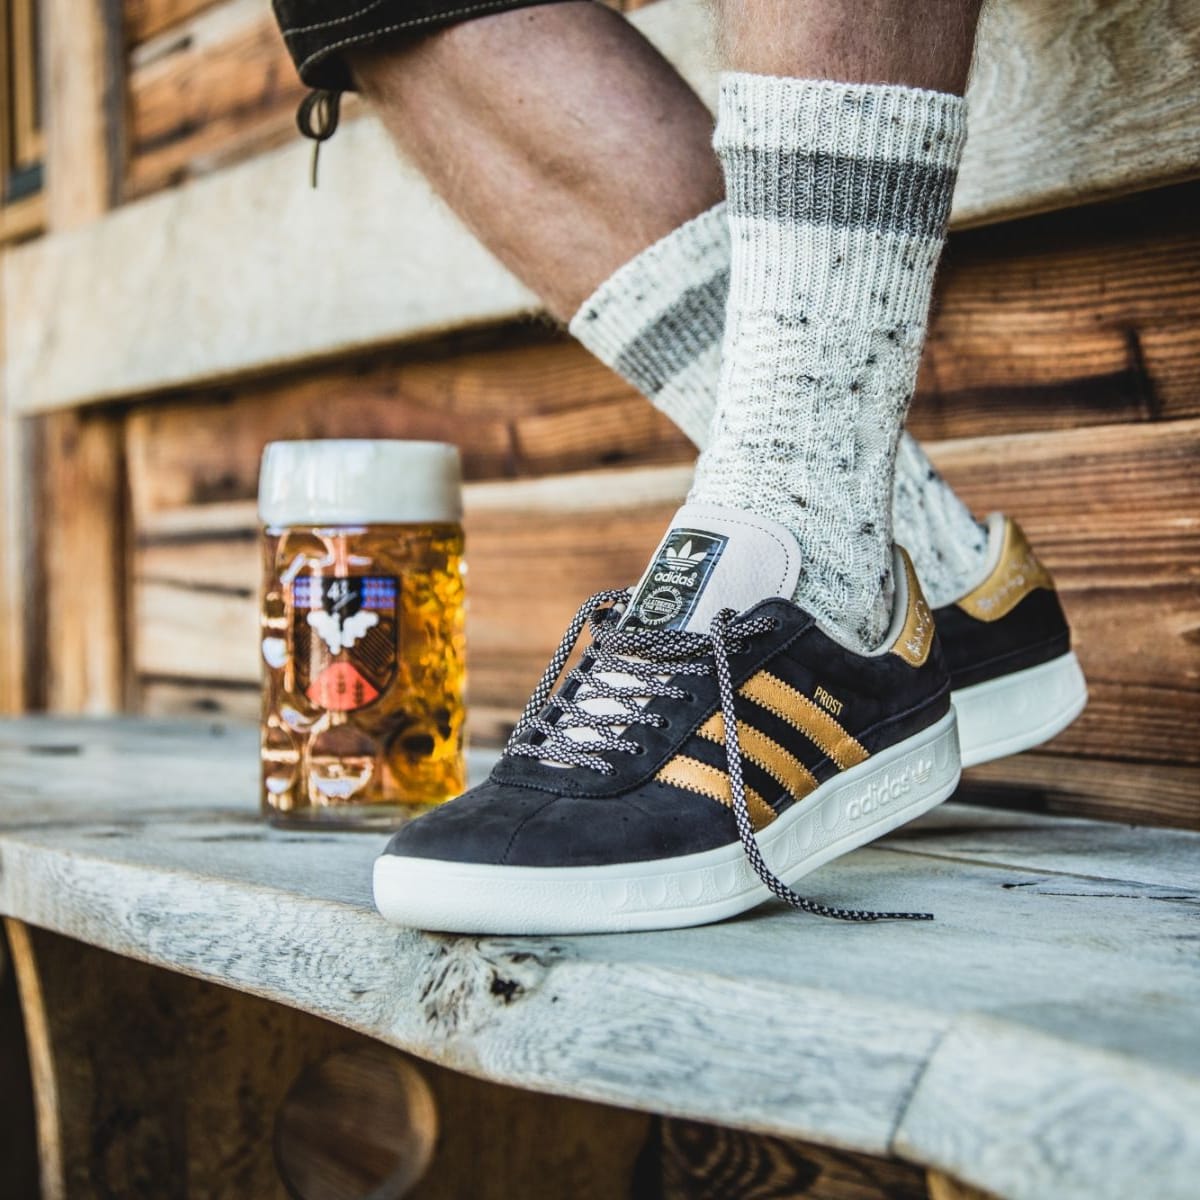 Adidas Beer-Proof Sneakers for Oktoberfest - Men's Journal